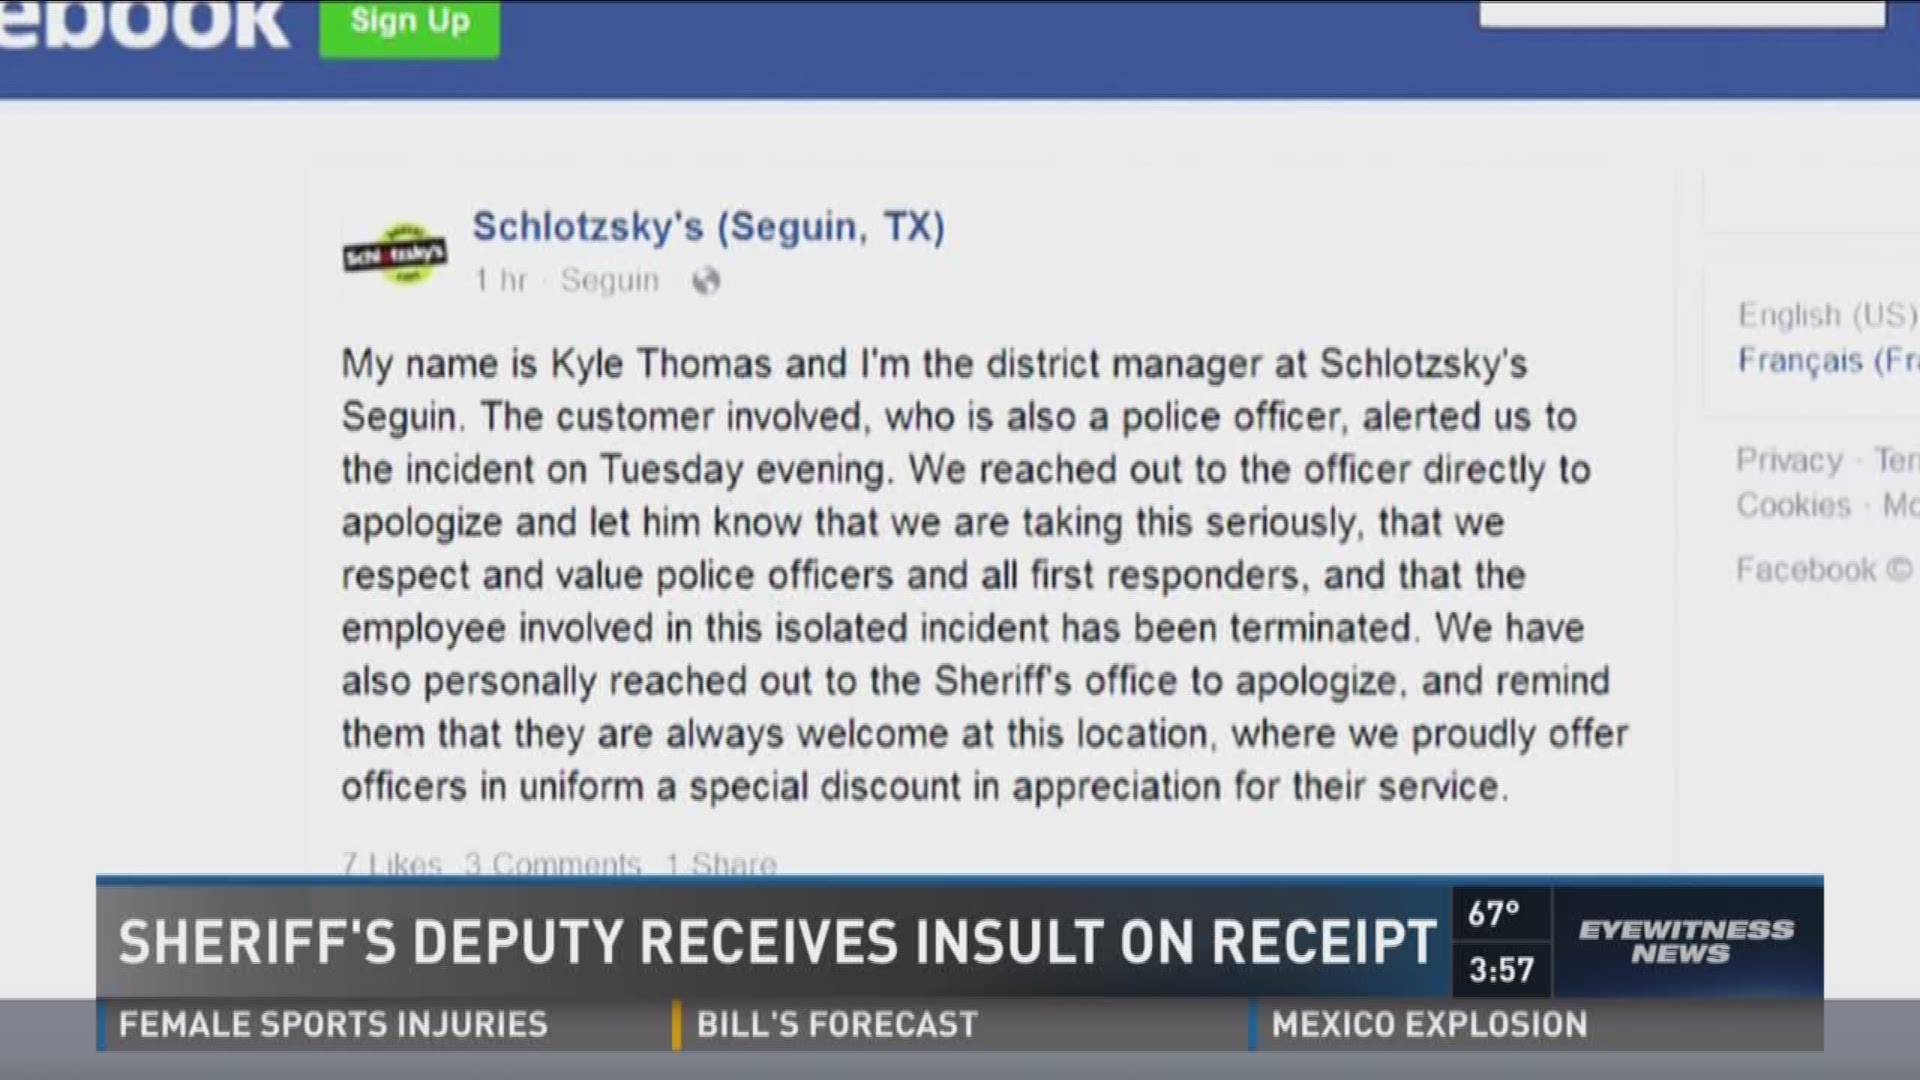 Sheriff's Deputy receives insult on receipt